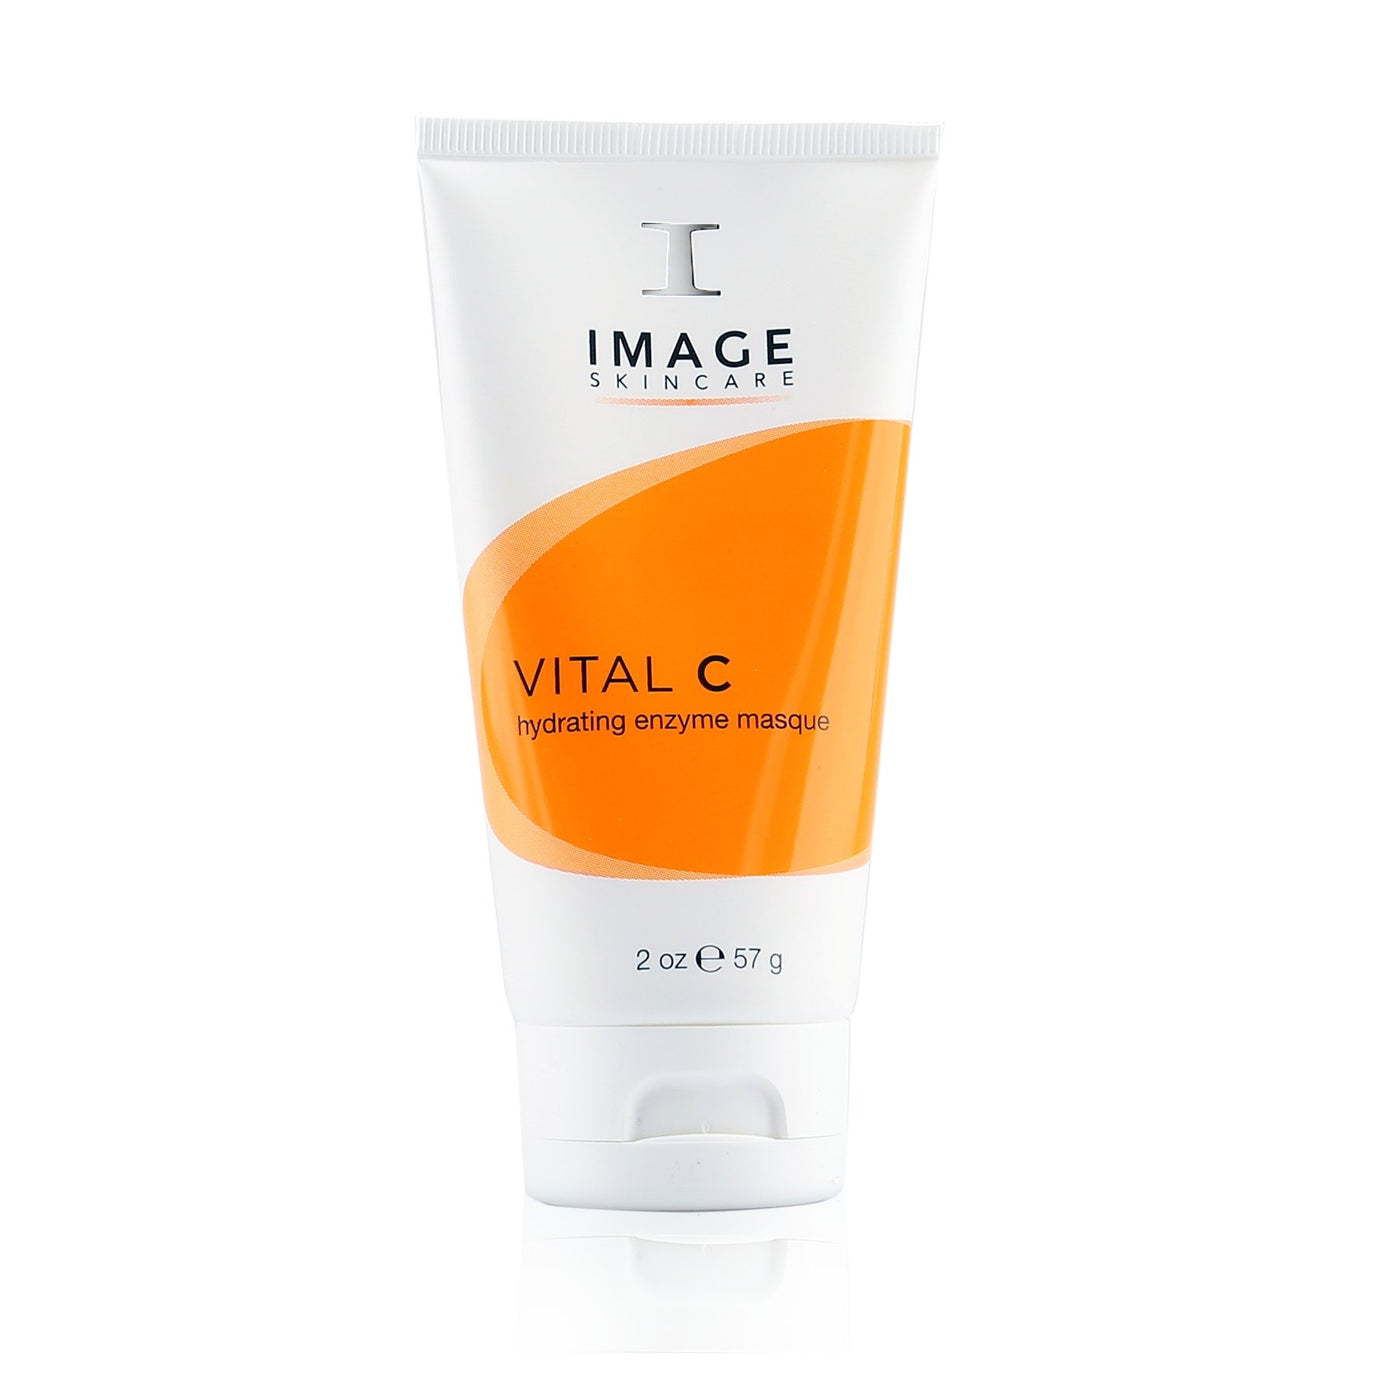 VITAL C hydrating enzyme masque 2oz - The Skin Beauty Shoppe